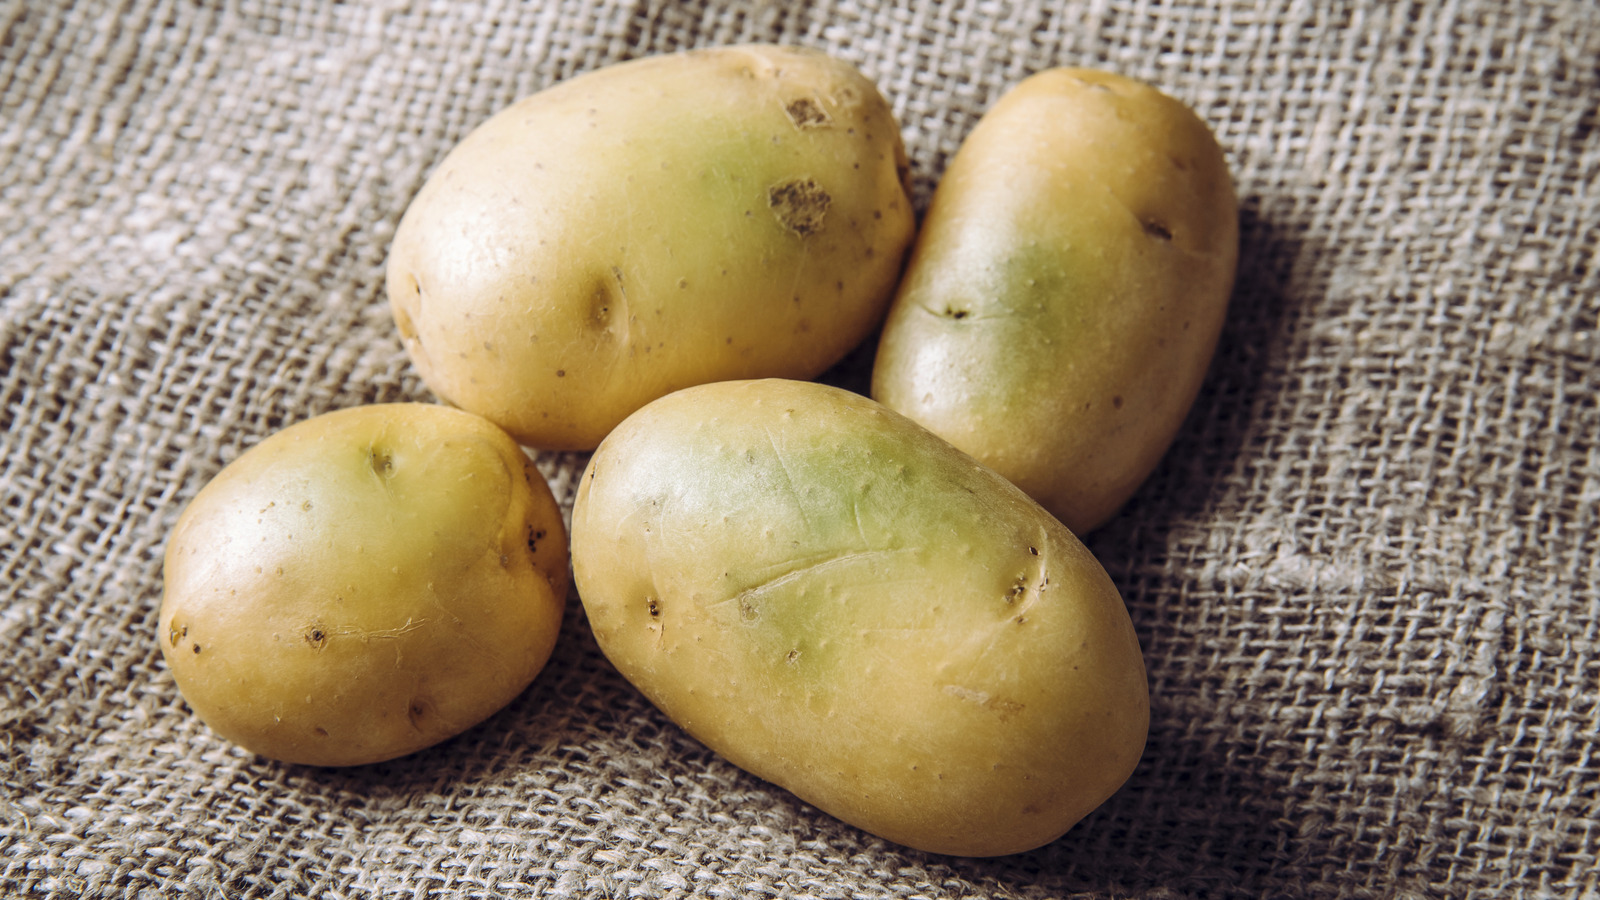 Why do potatoes sometimes turn green?